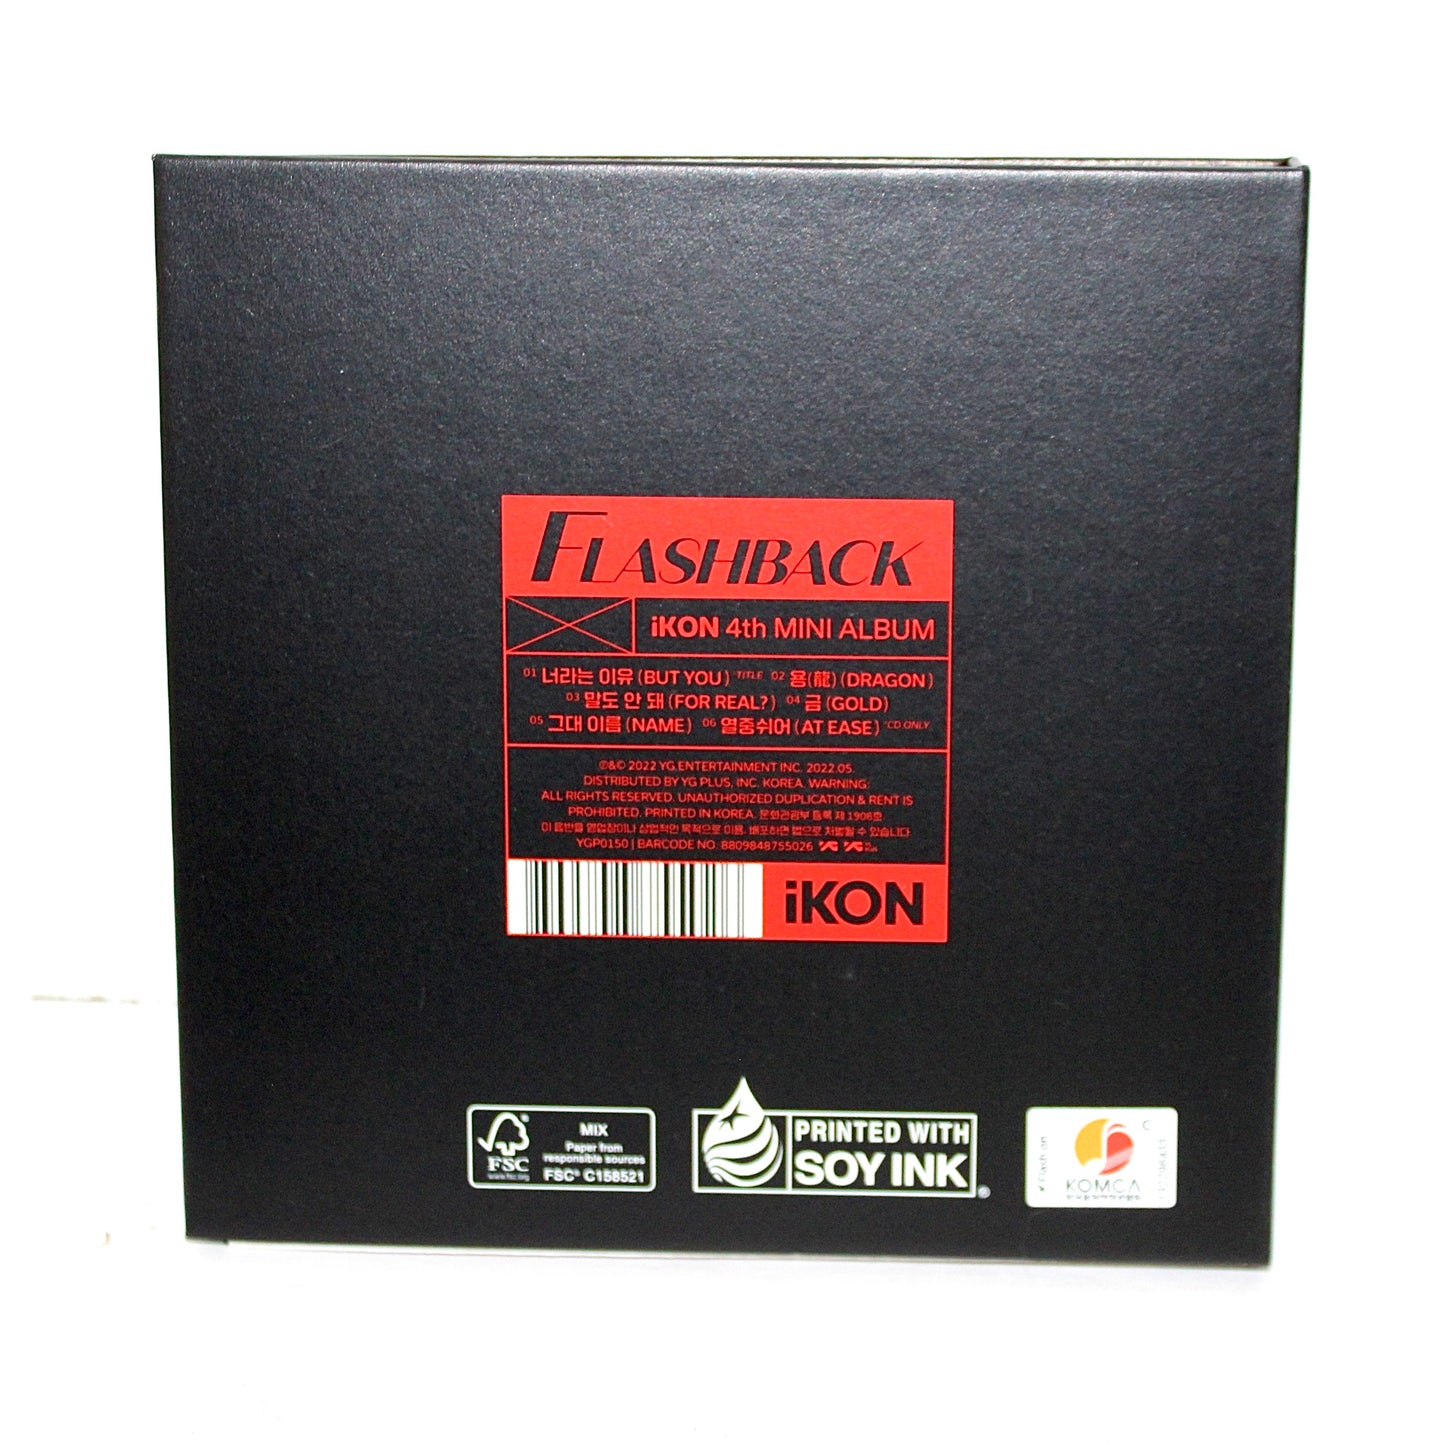 iKON 4th Mini Album: Flashback | Digipack Ver.